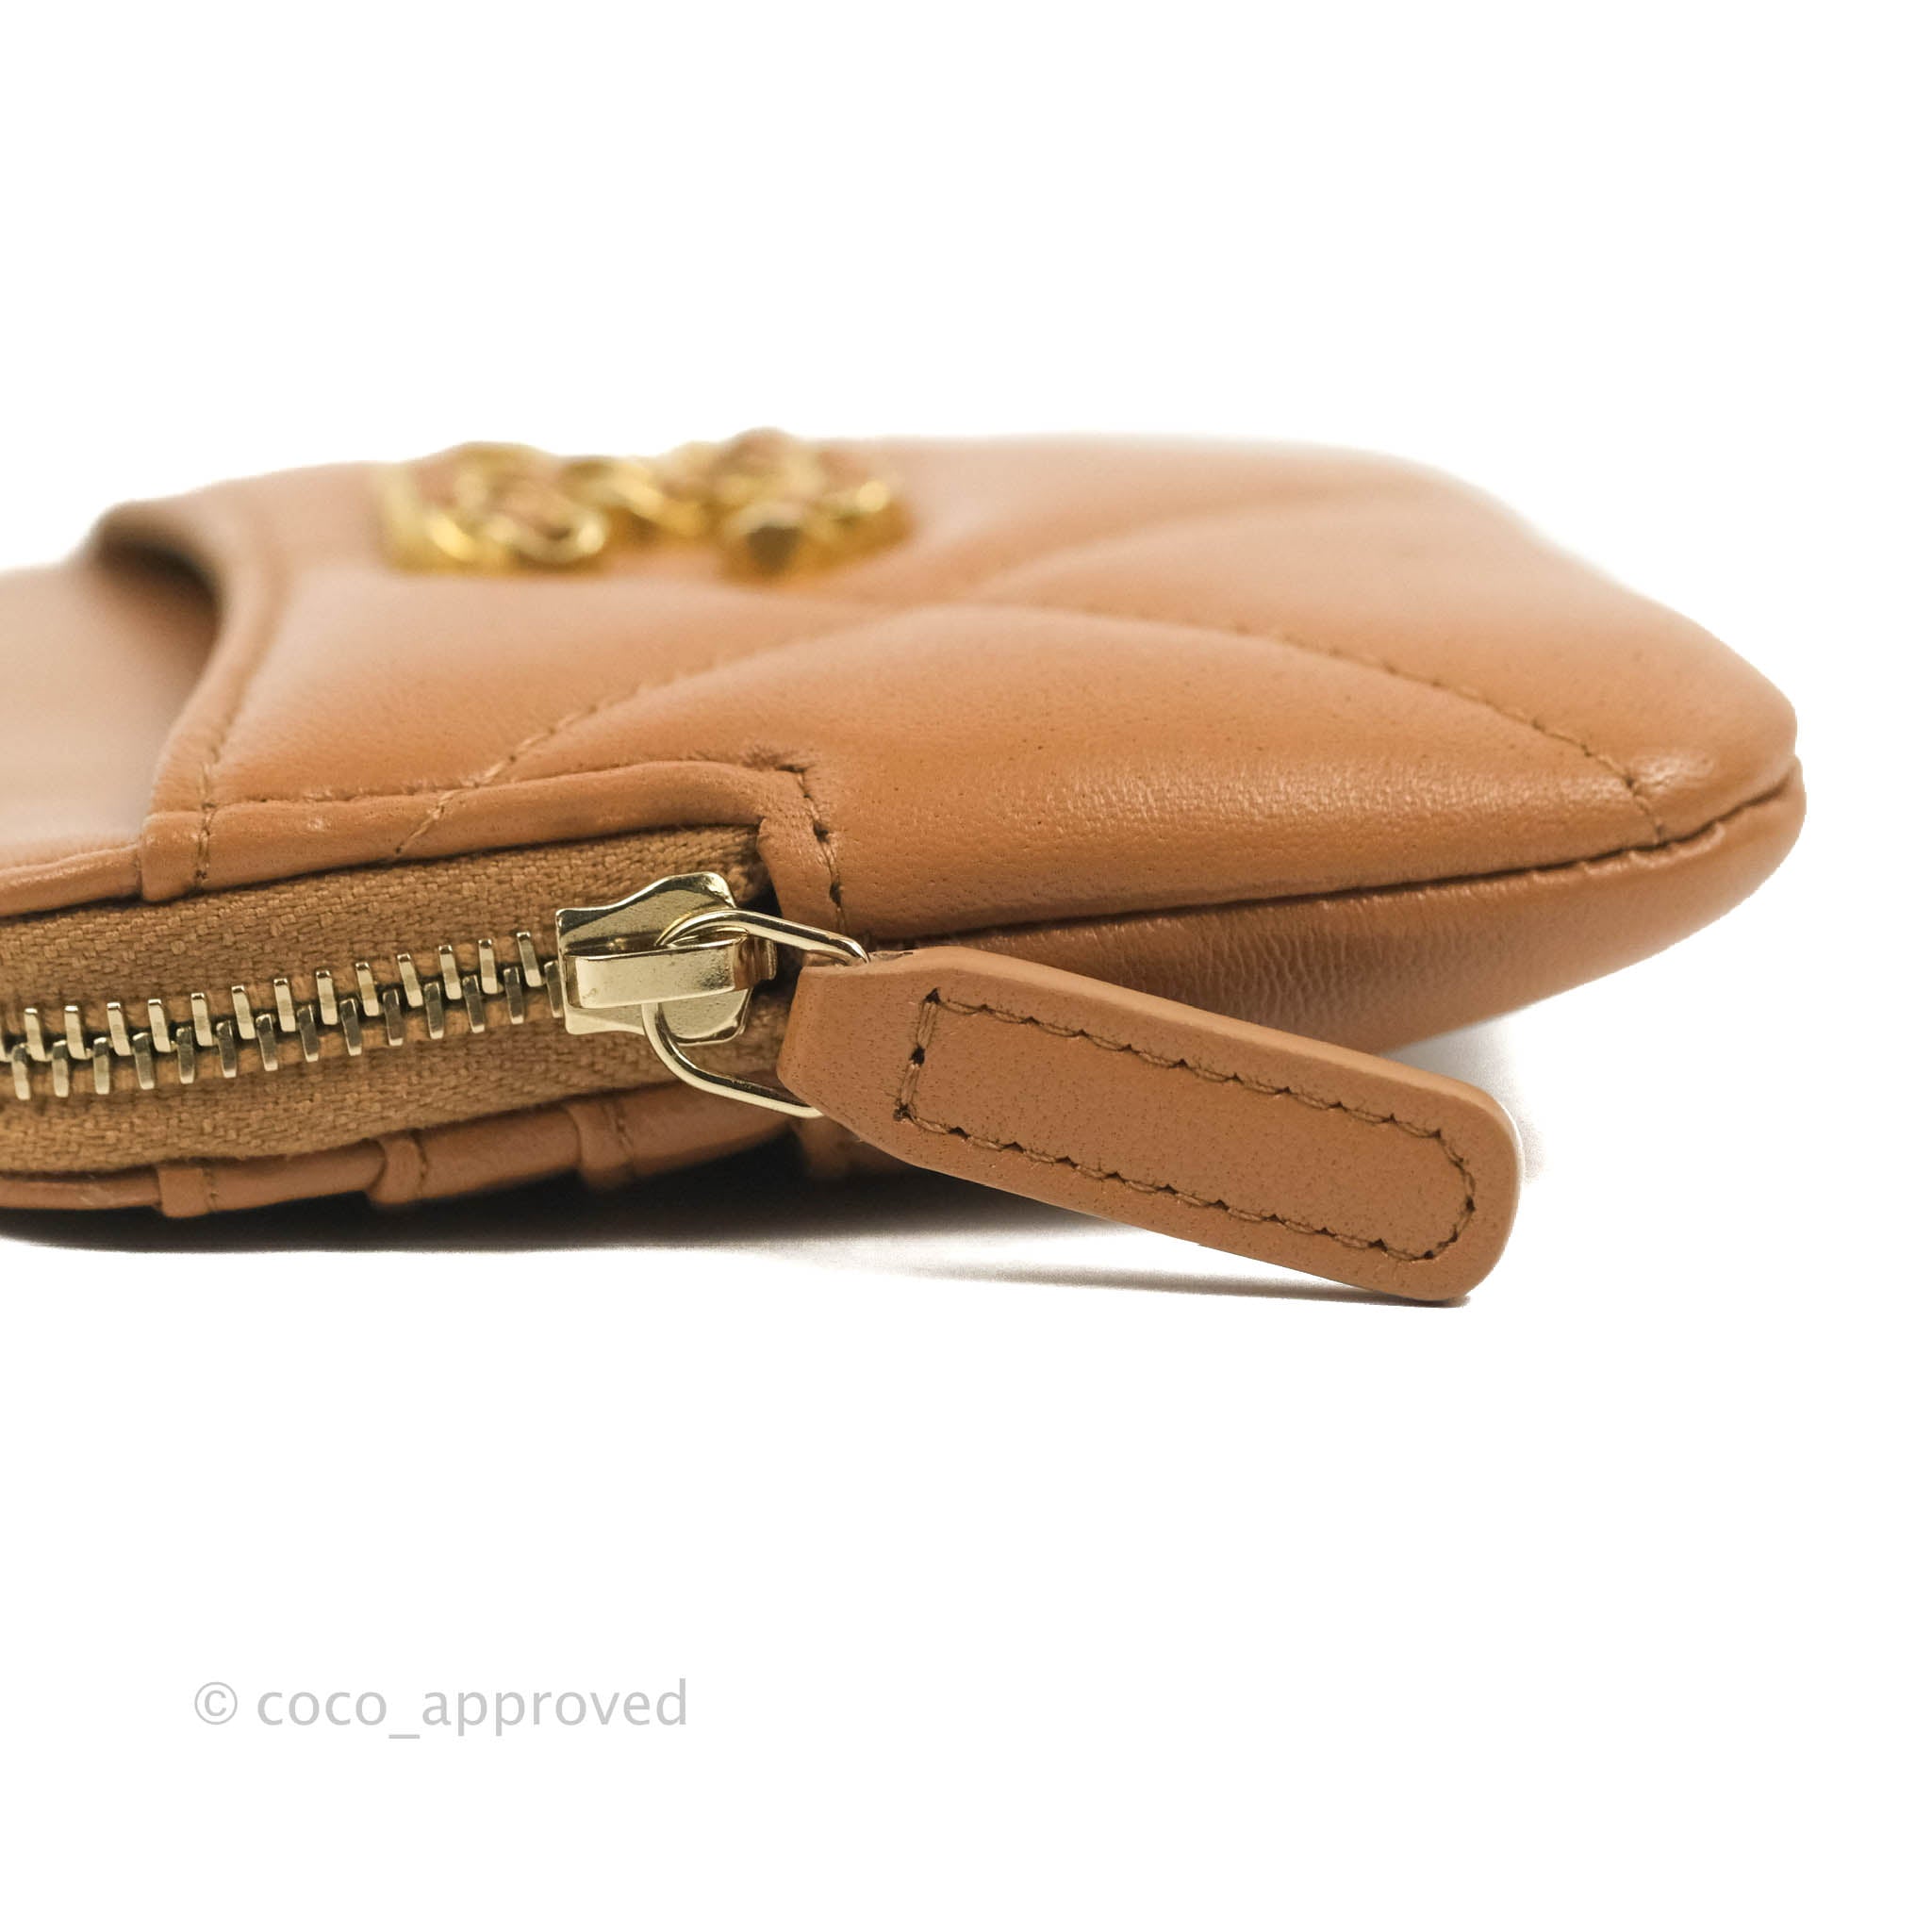 chanel gold purse charm